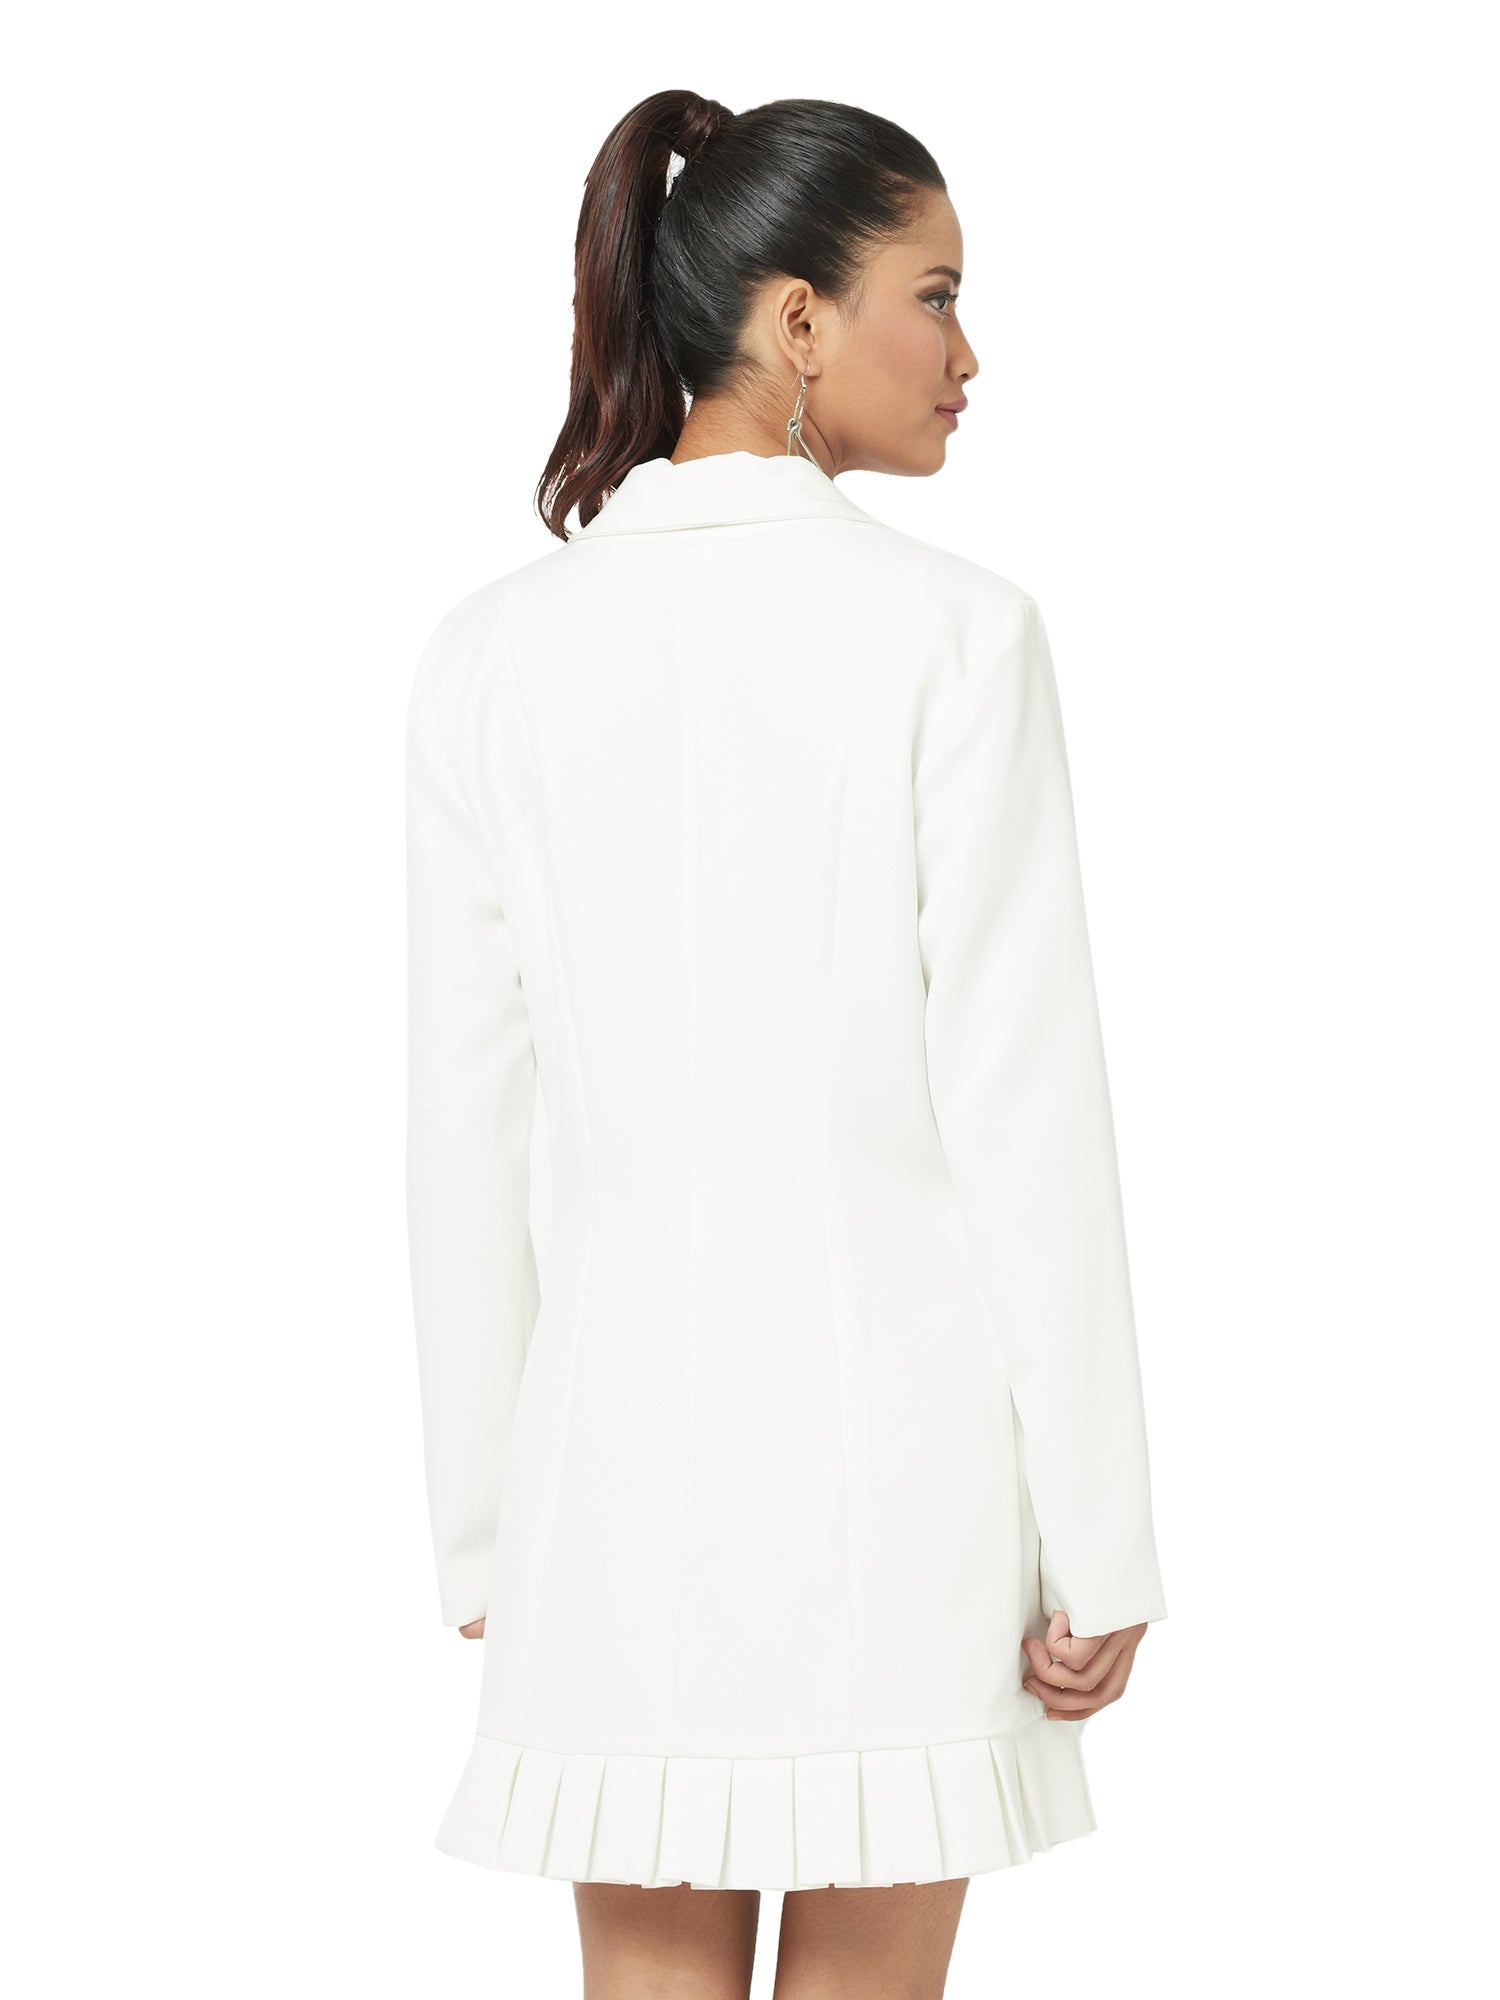 white tailored box pleats dress